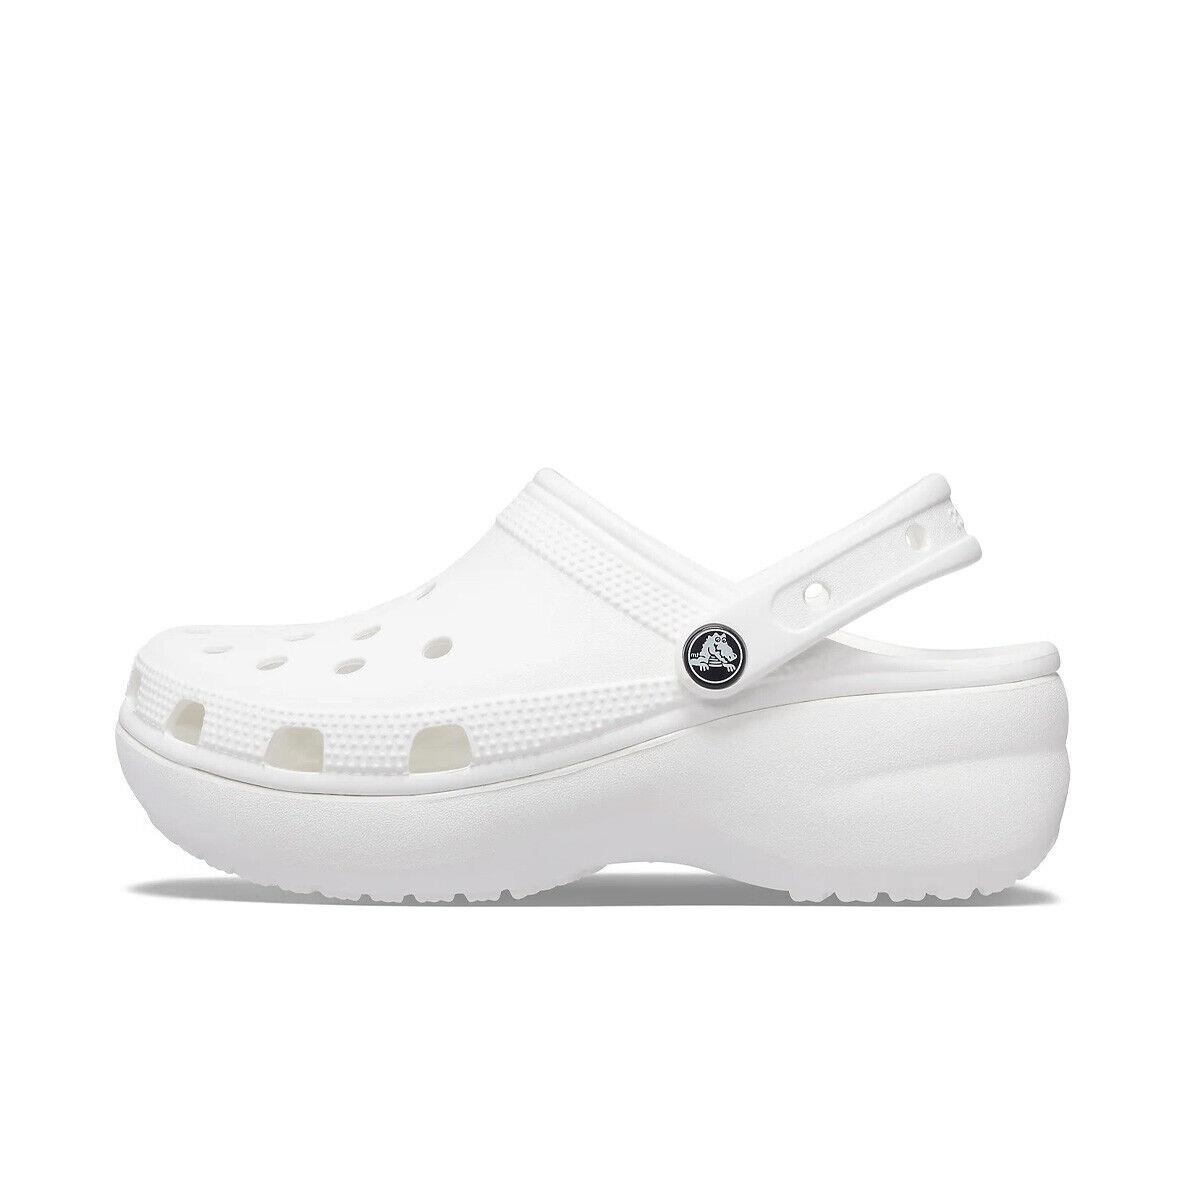 Crocs Clogs Classic Platform Unisex Adults White 206750 Slip On - White